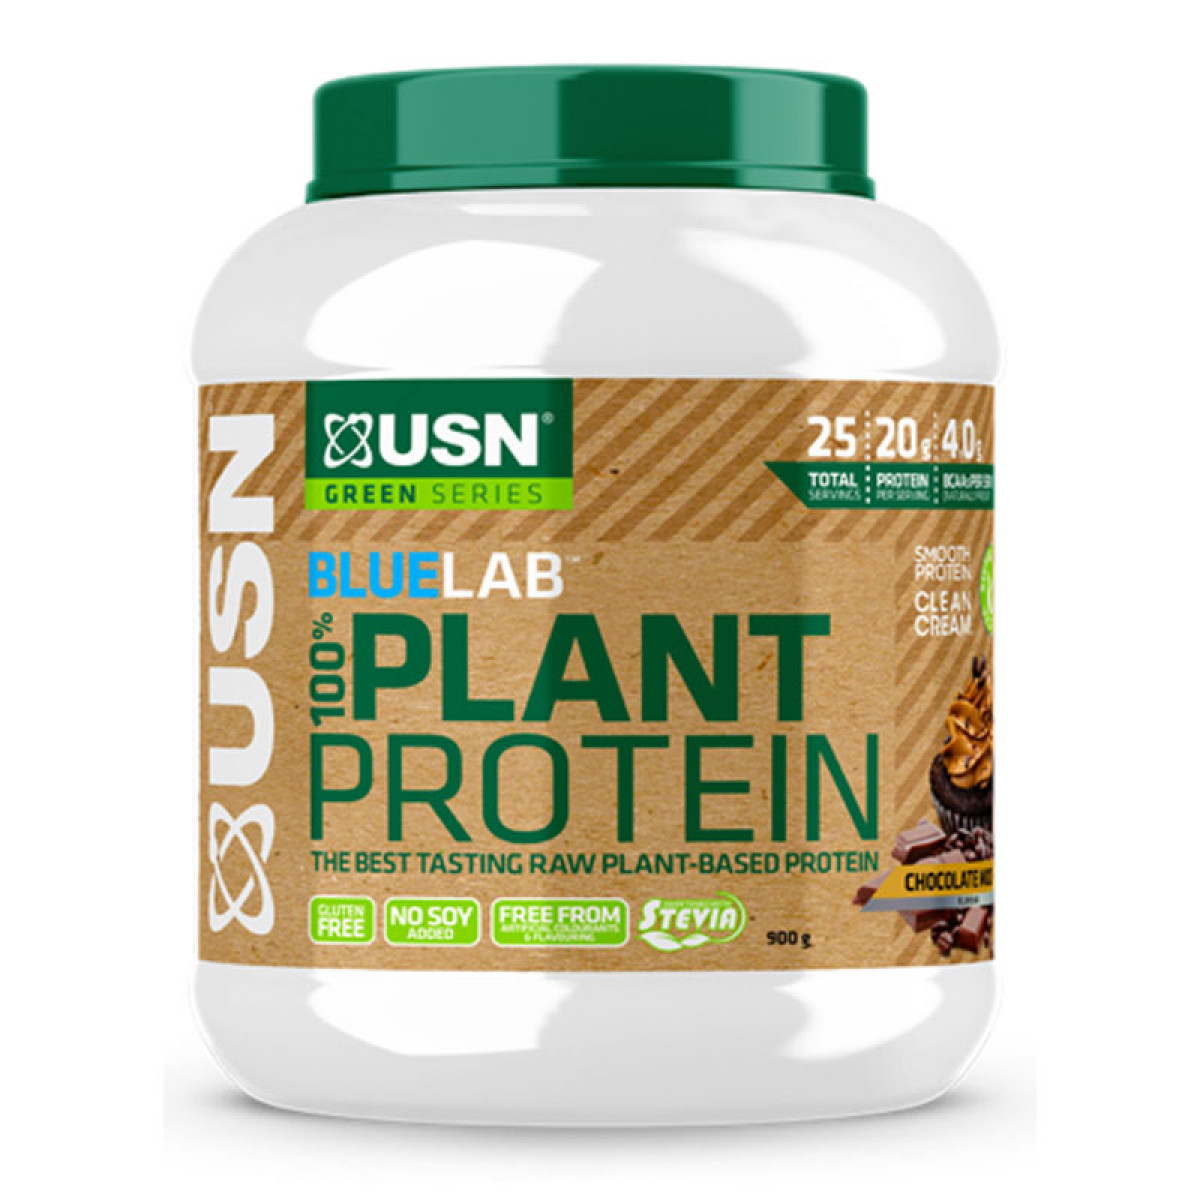 Usn протеин купить. Протеин USN 100% Plant Protein. USN протеин Vegan. Протеин Bluelab. Плант протеин ЮСН веган.